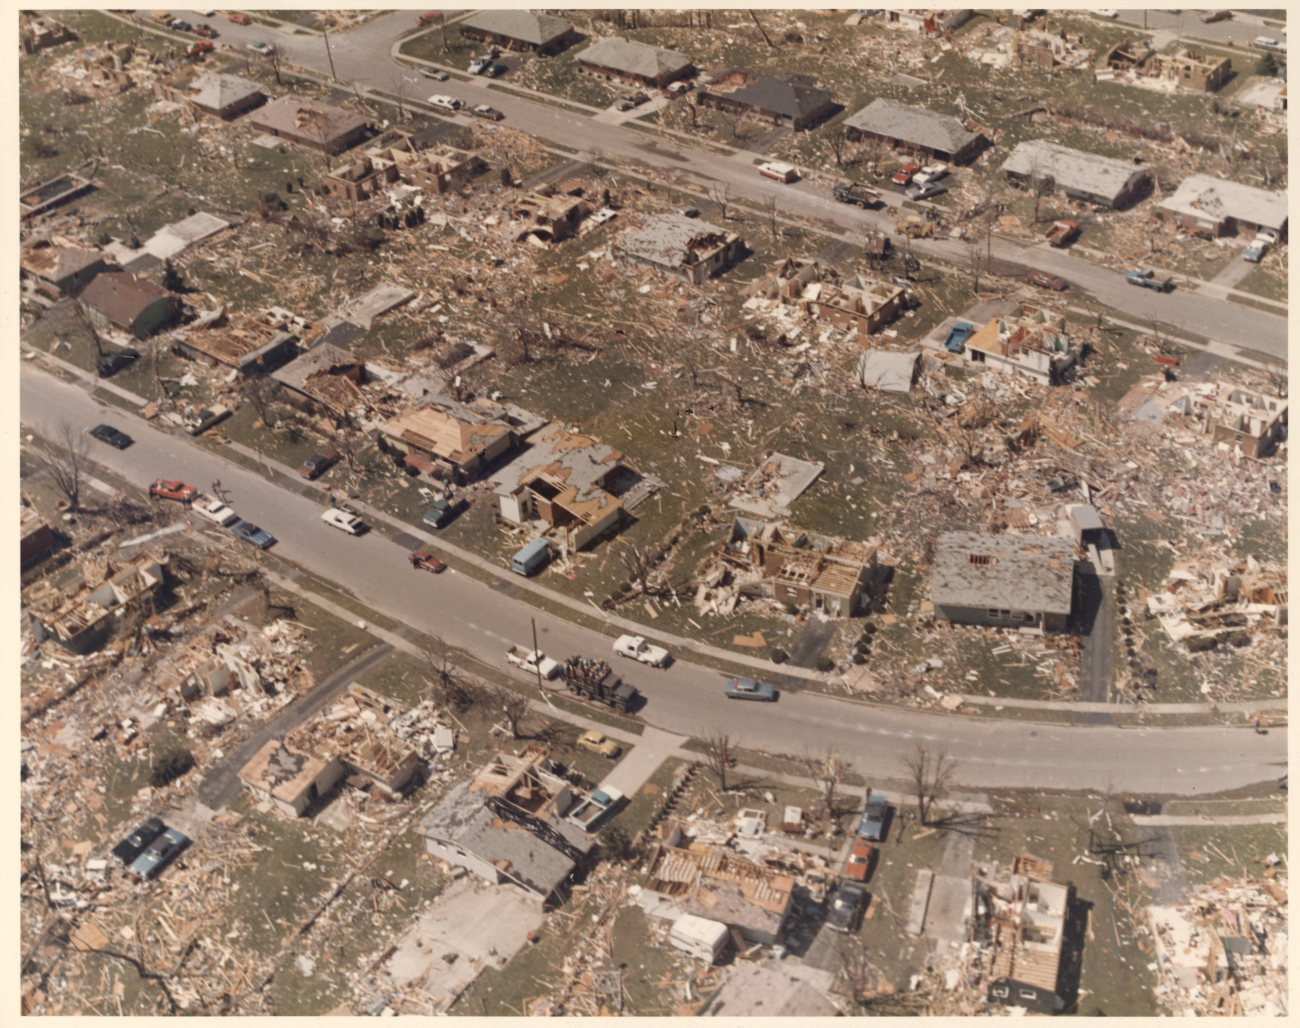 Northeast Xenia tornado damage from Super Tornado Outbreak of April 3, 1974